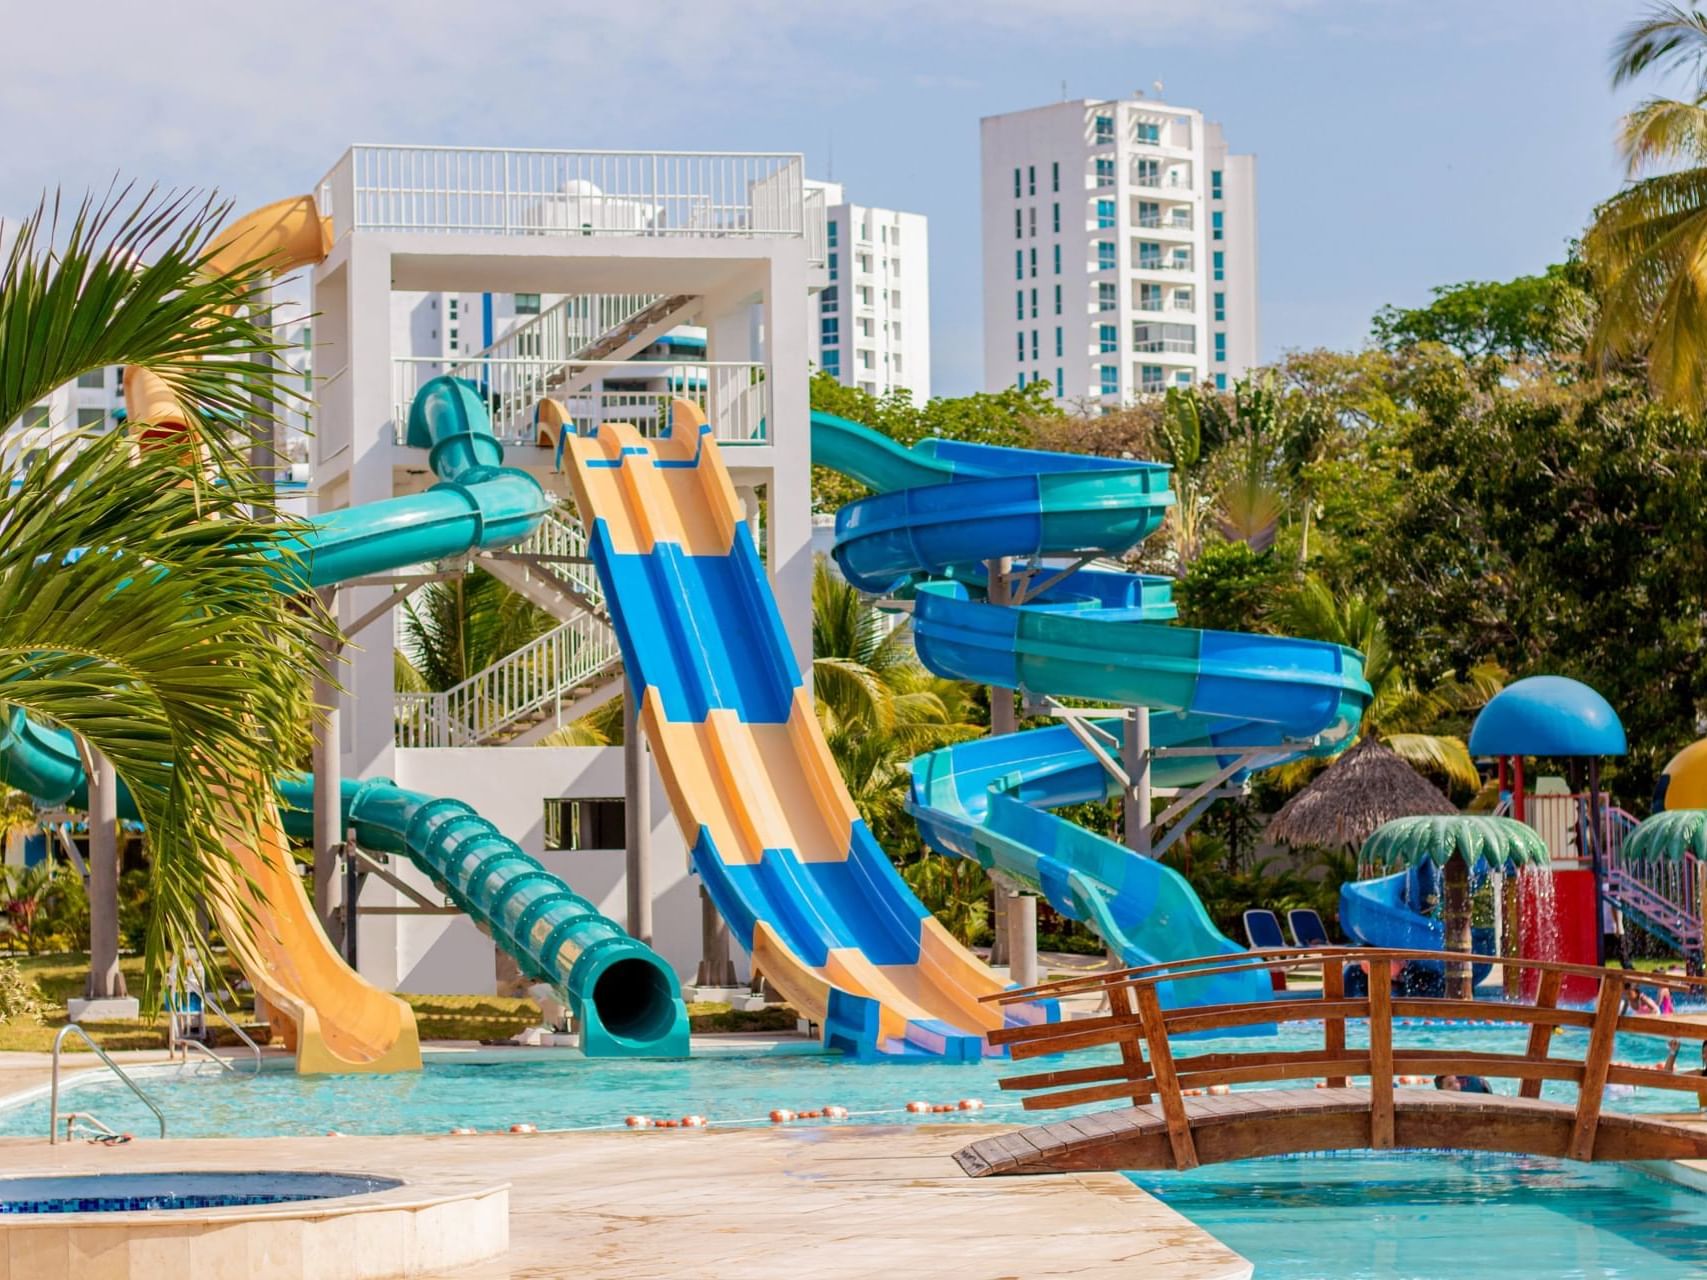 Landscape view of water slides at Playa Blanca Beach Resort